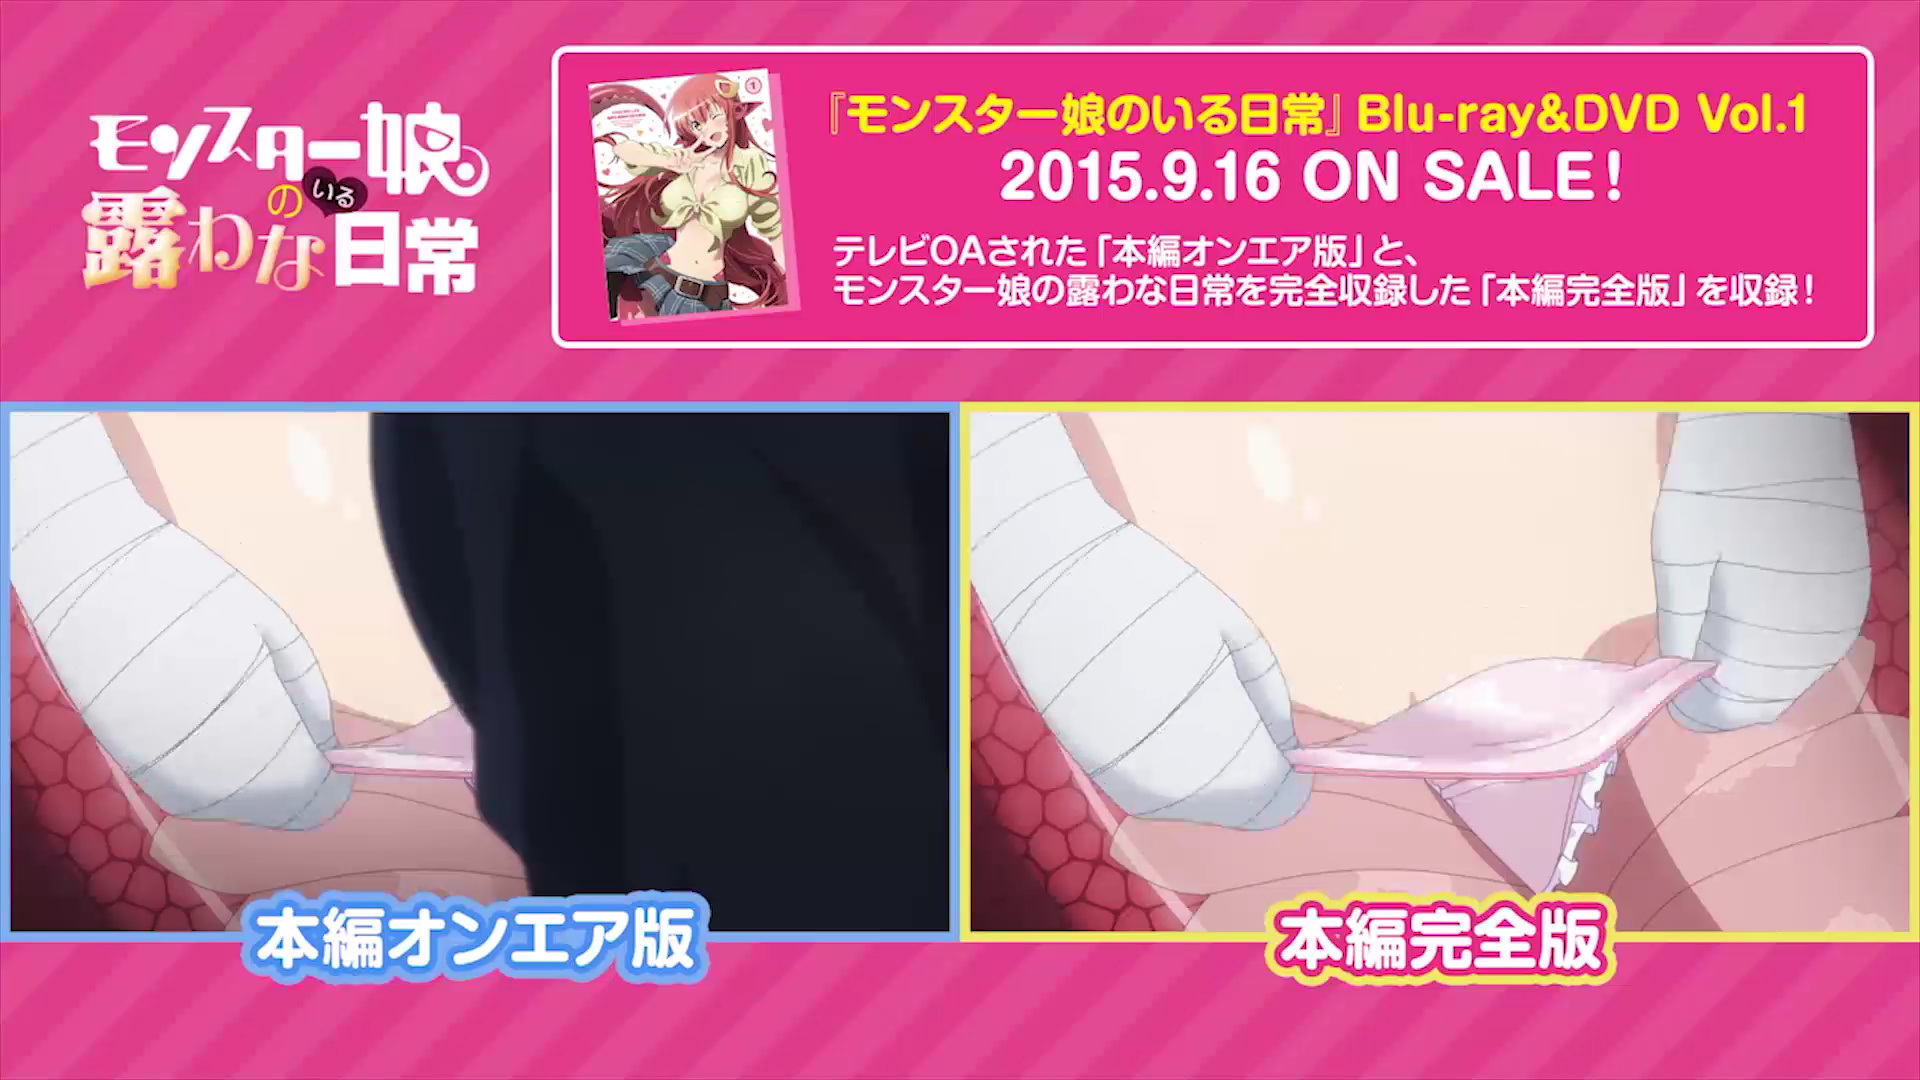 TV vs Blu-Ray Monster Musume anime blu-ray volume 1 uncensored 15